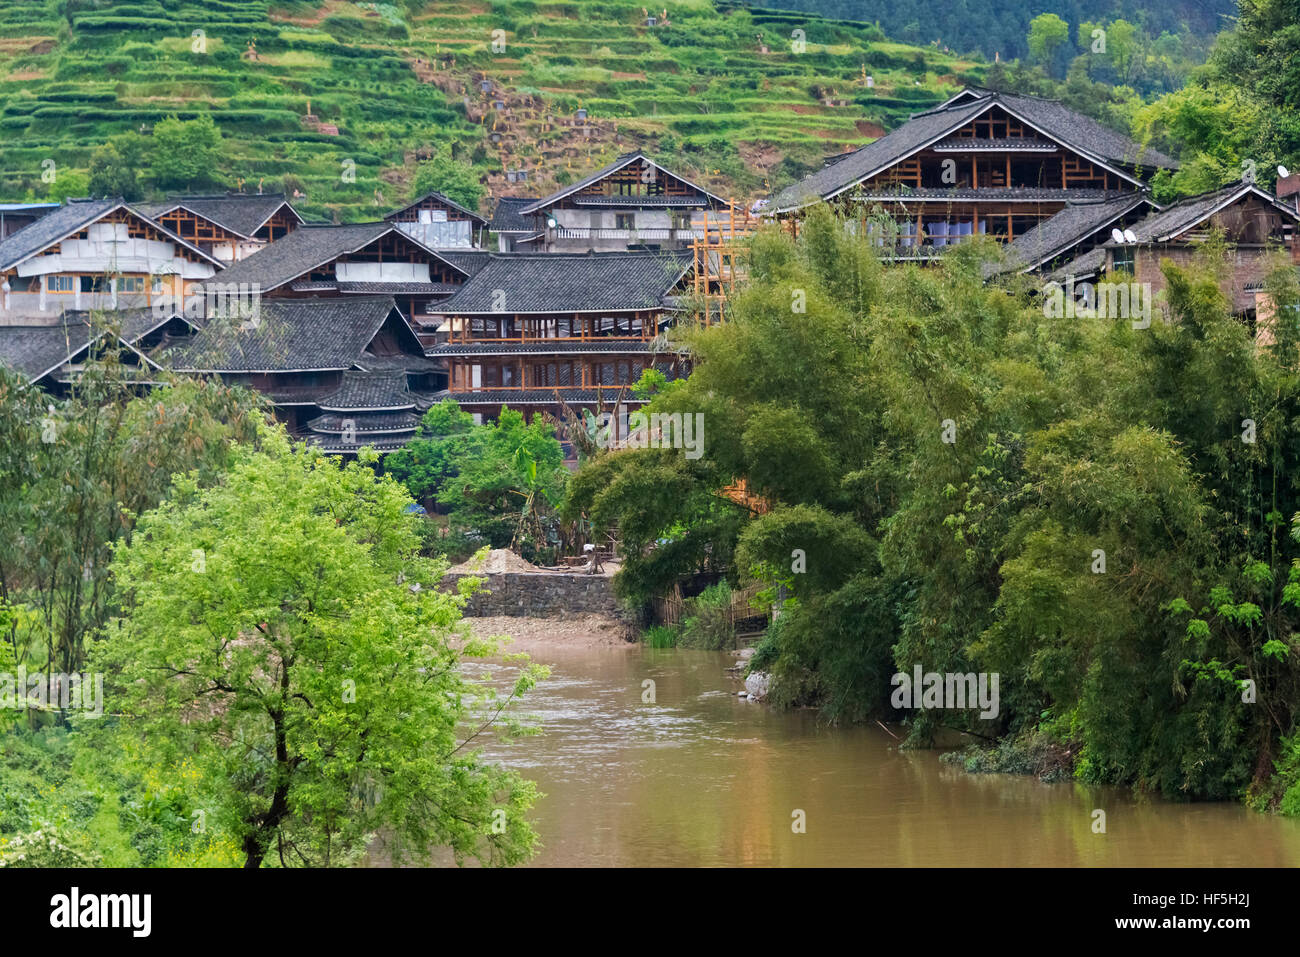 Village with river, Chengyang, Sanjiang, Guangxi Province, China Stock Photo